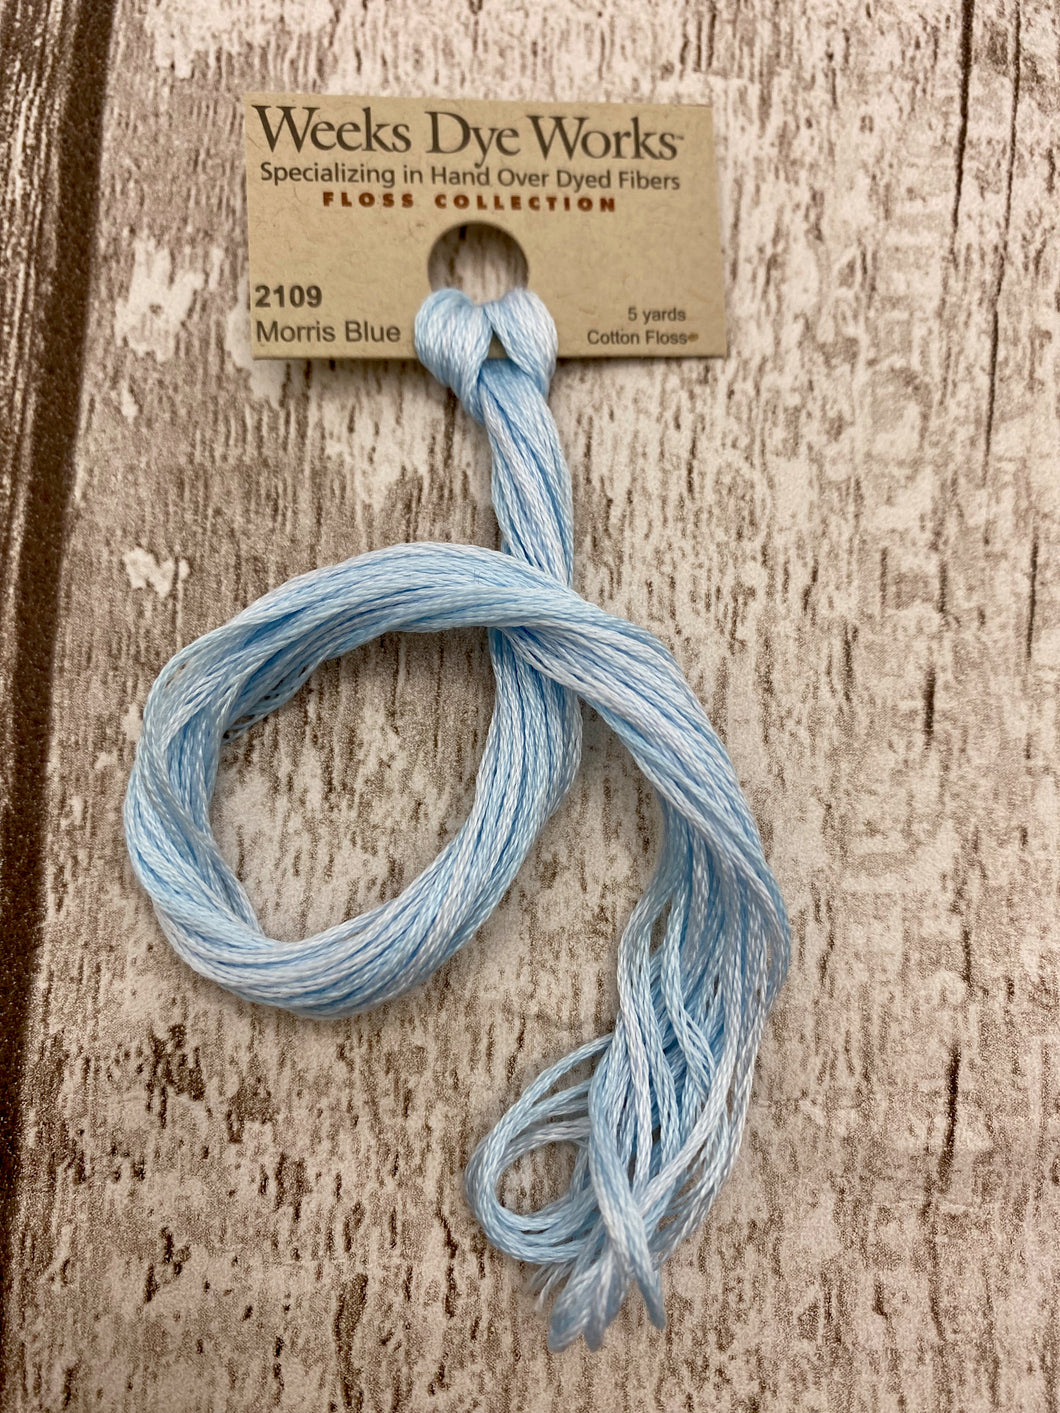 Morris Blue (#2109) Weeks Dye Works 6-strand cotton floss